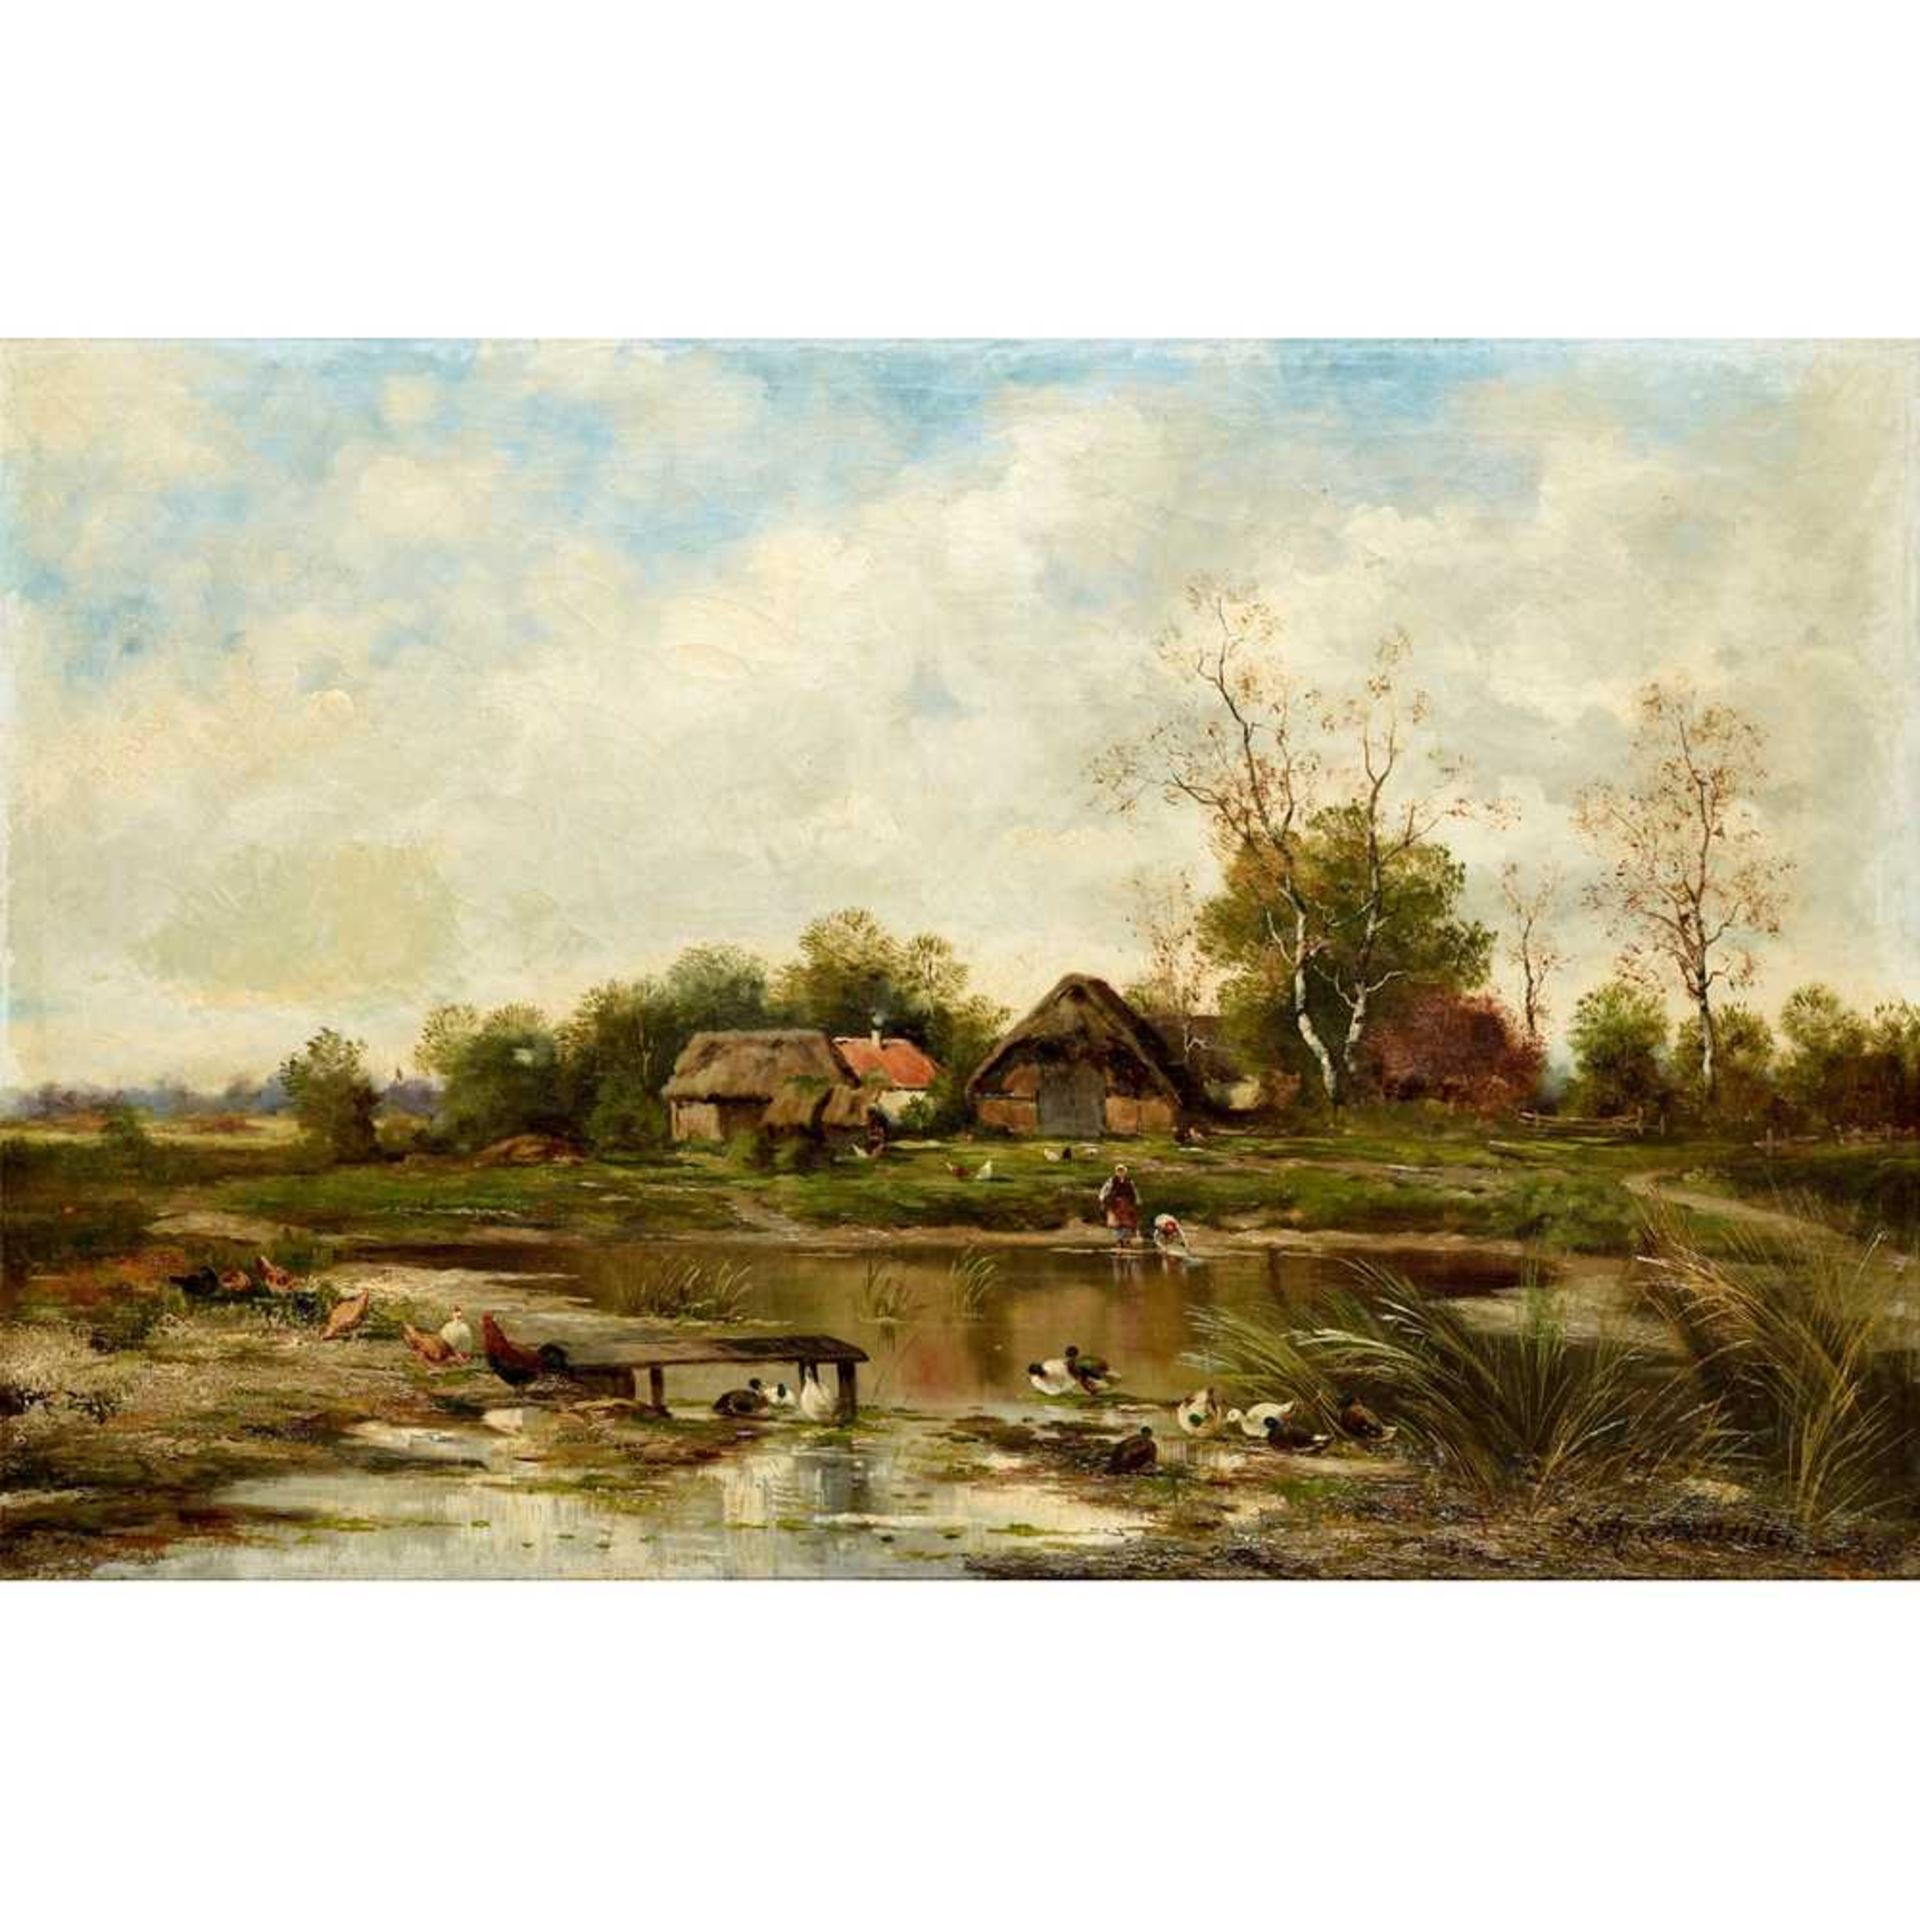 NOEL SAUNIER (FRENCH 1847-1890) A FARMYARD SCENE WITH DUCKS BY A POND